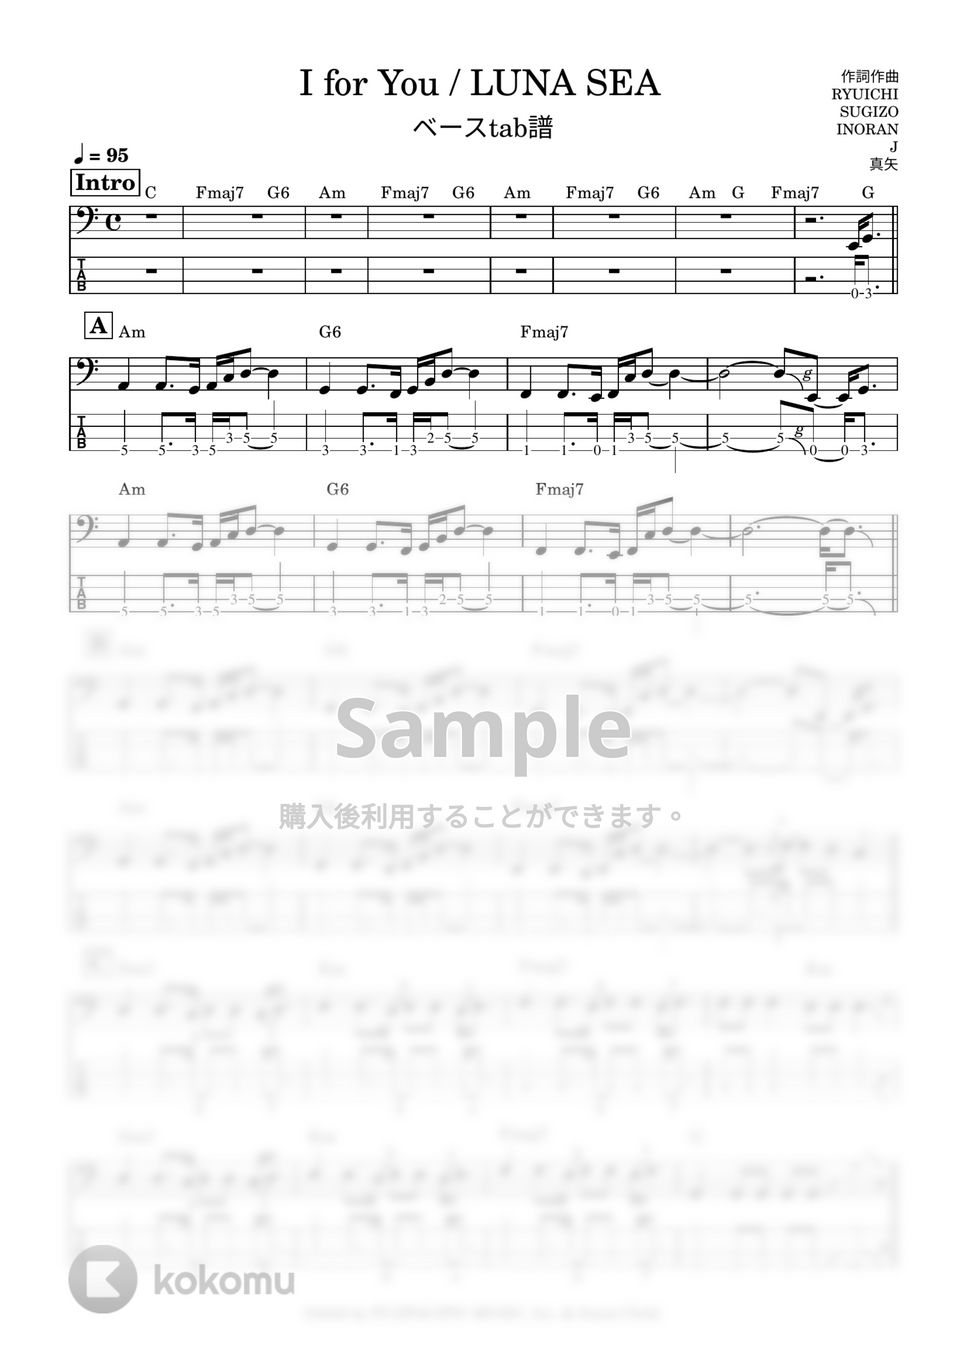 LUNA SEA - I for You (Bass Tab譜 +midi) by 鈴木建作